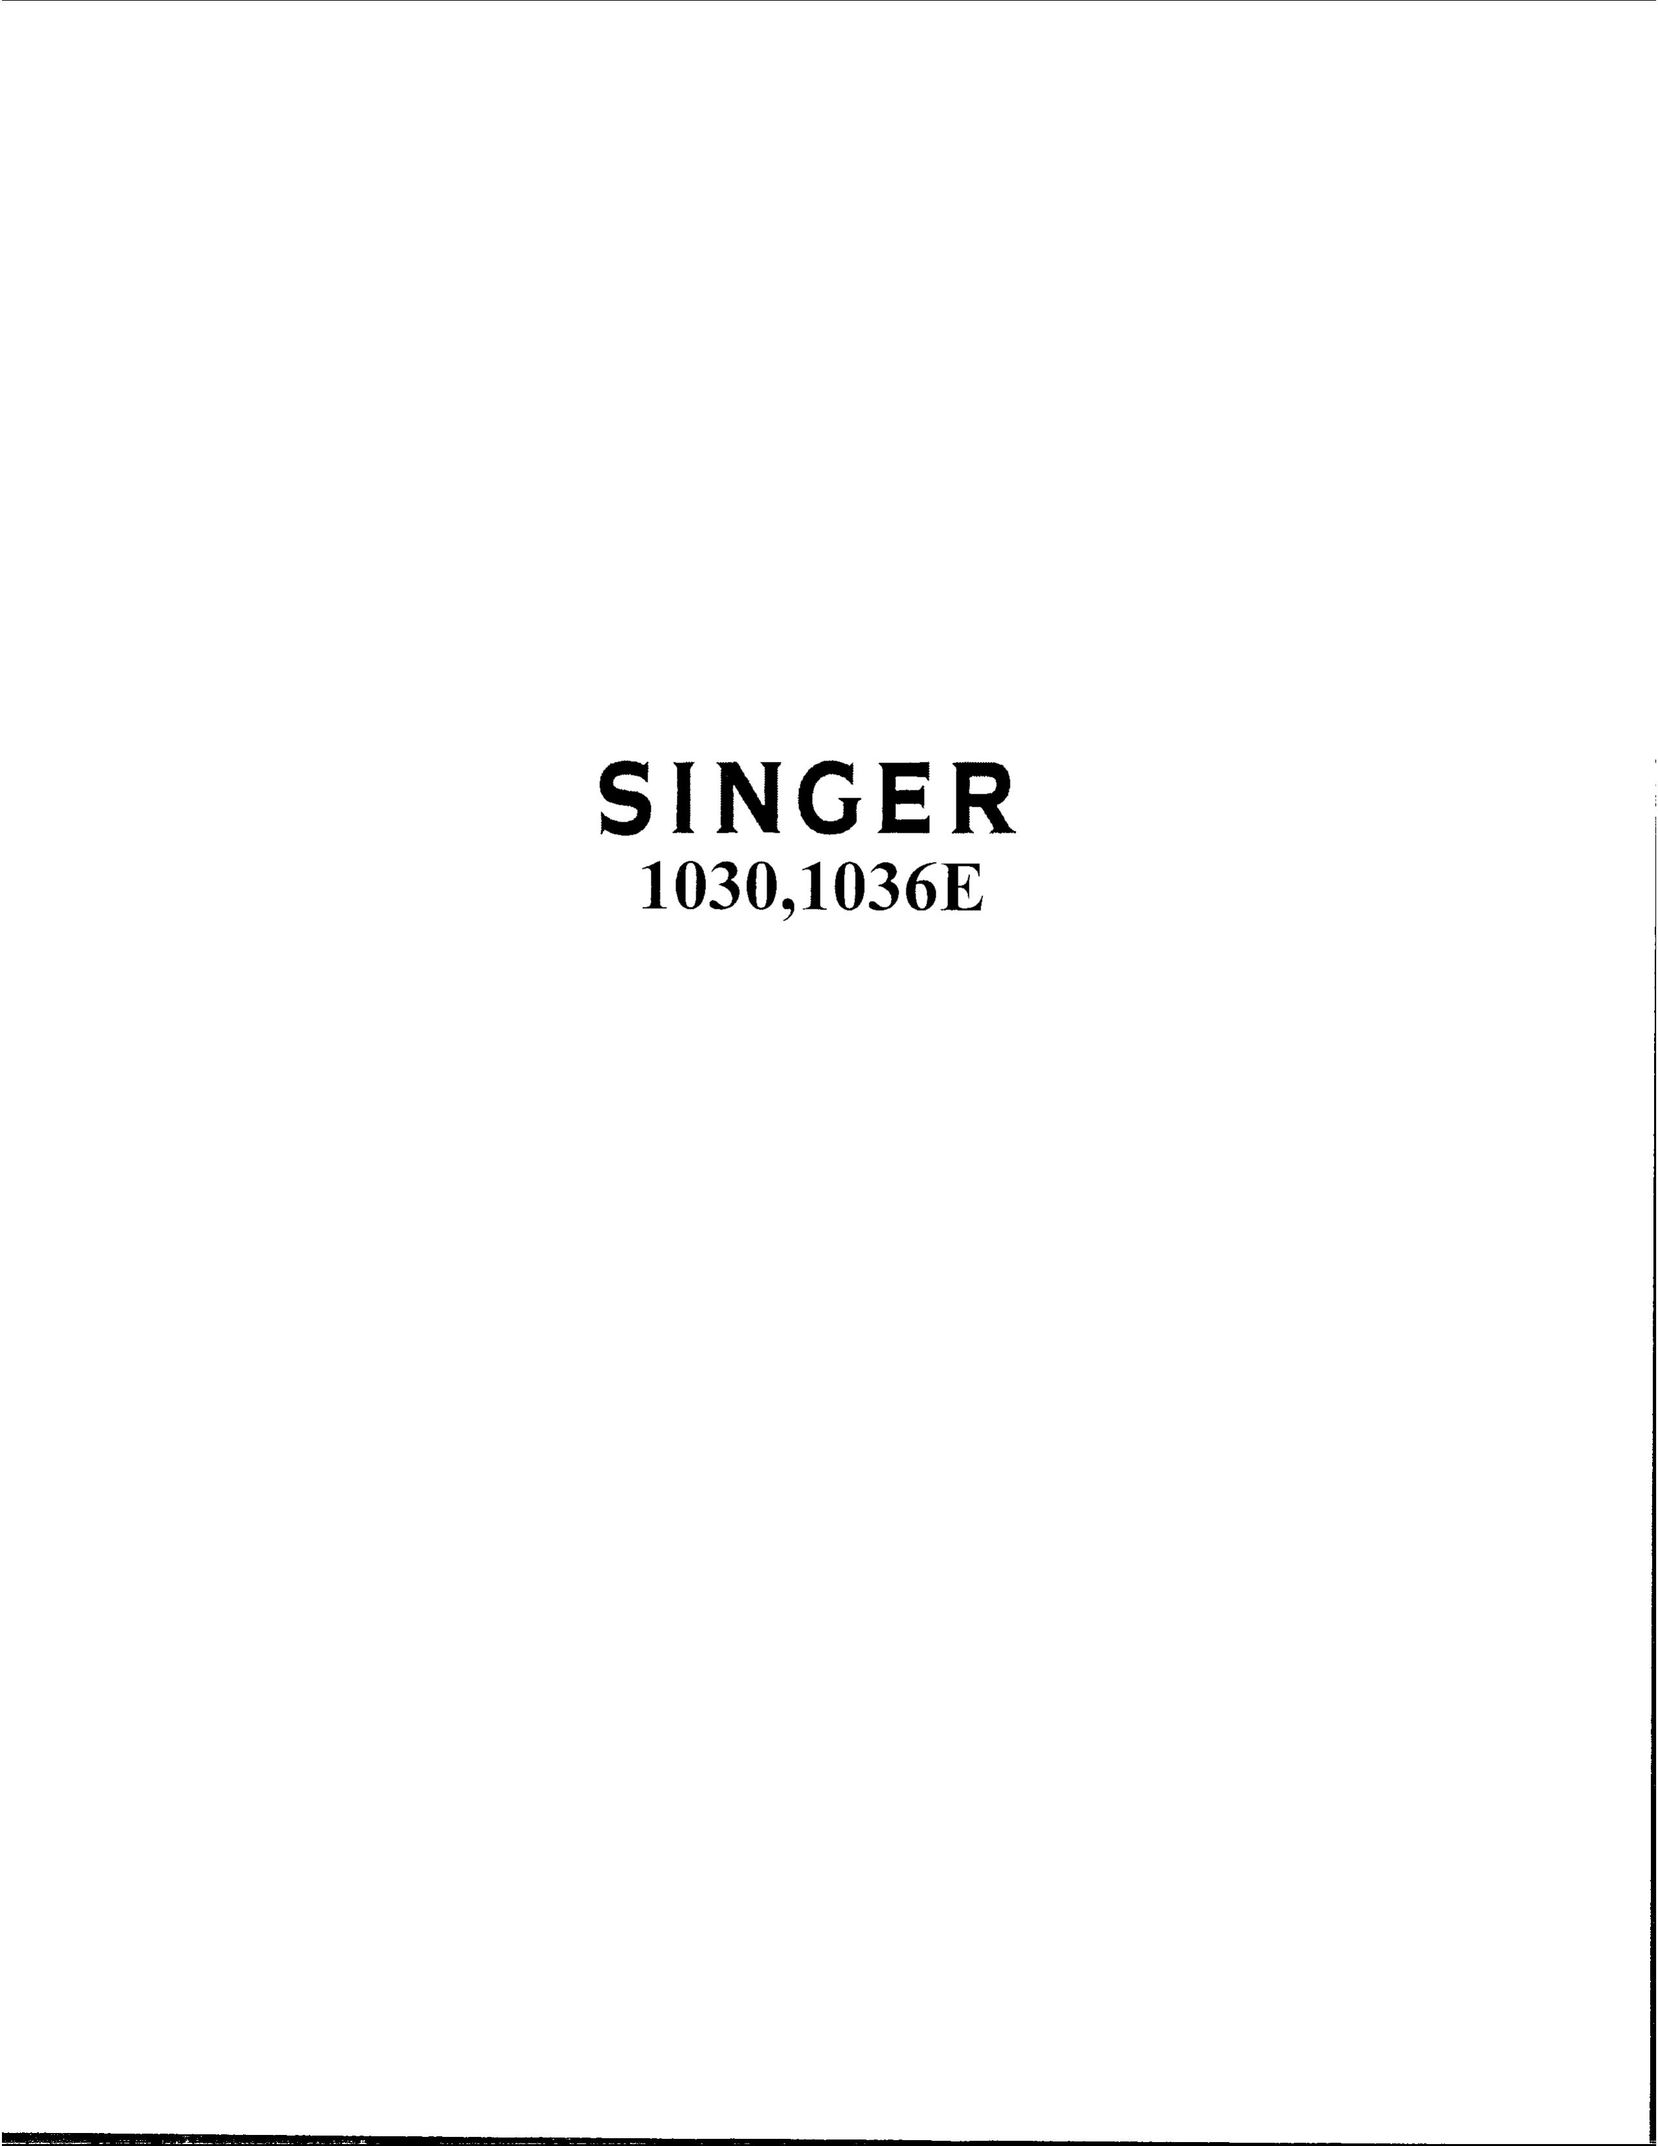 Singer 1036E Sewing Machine User Manual